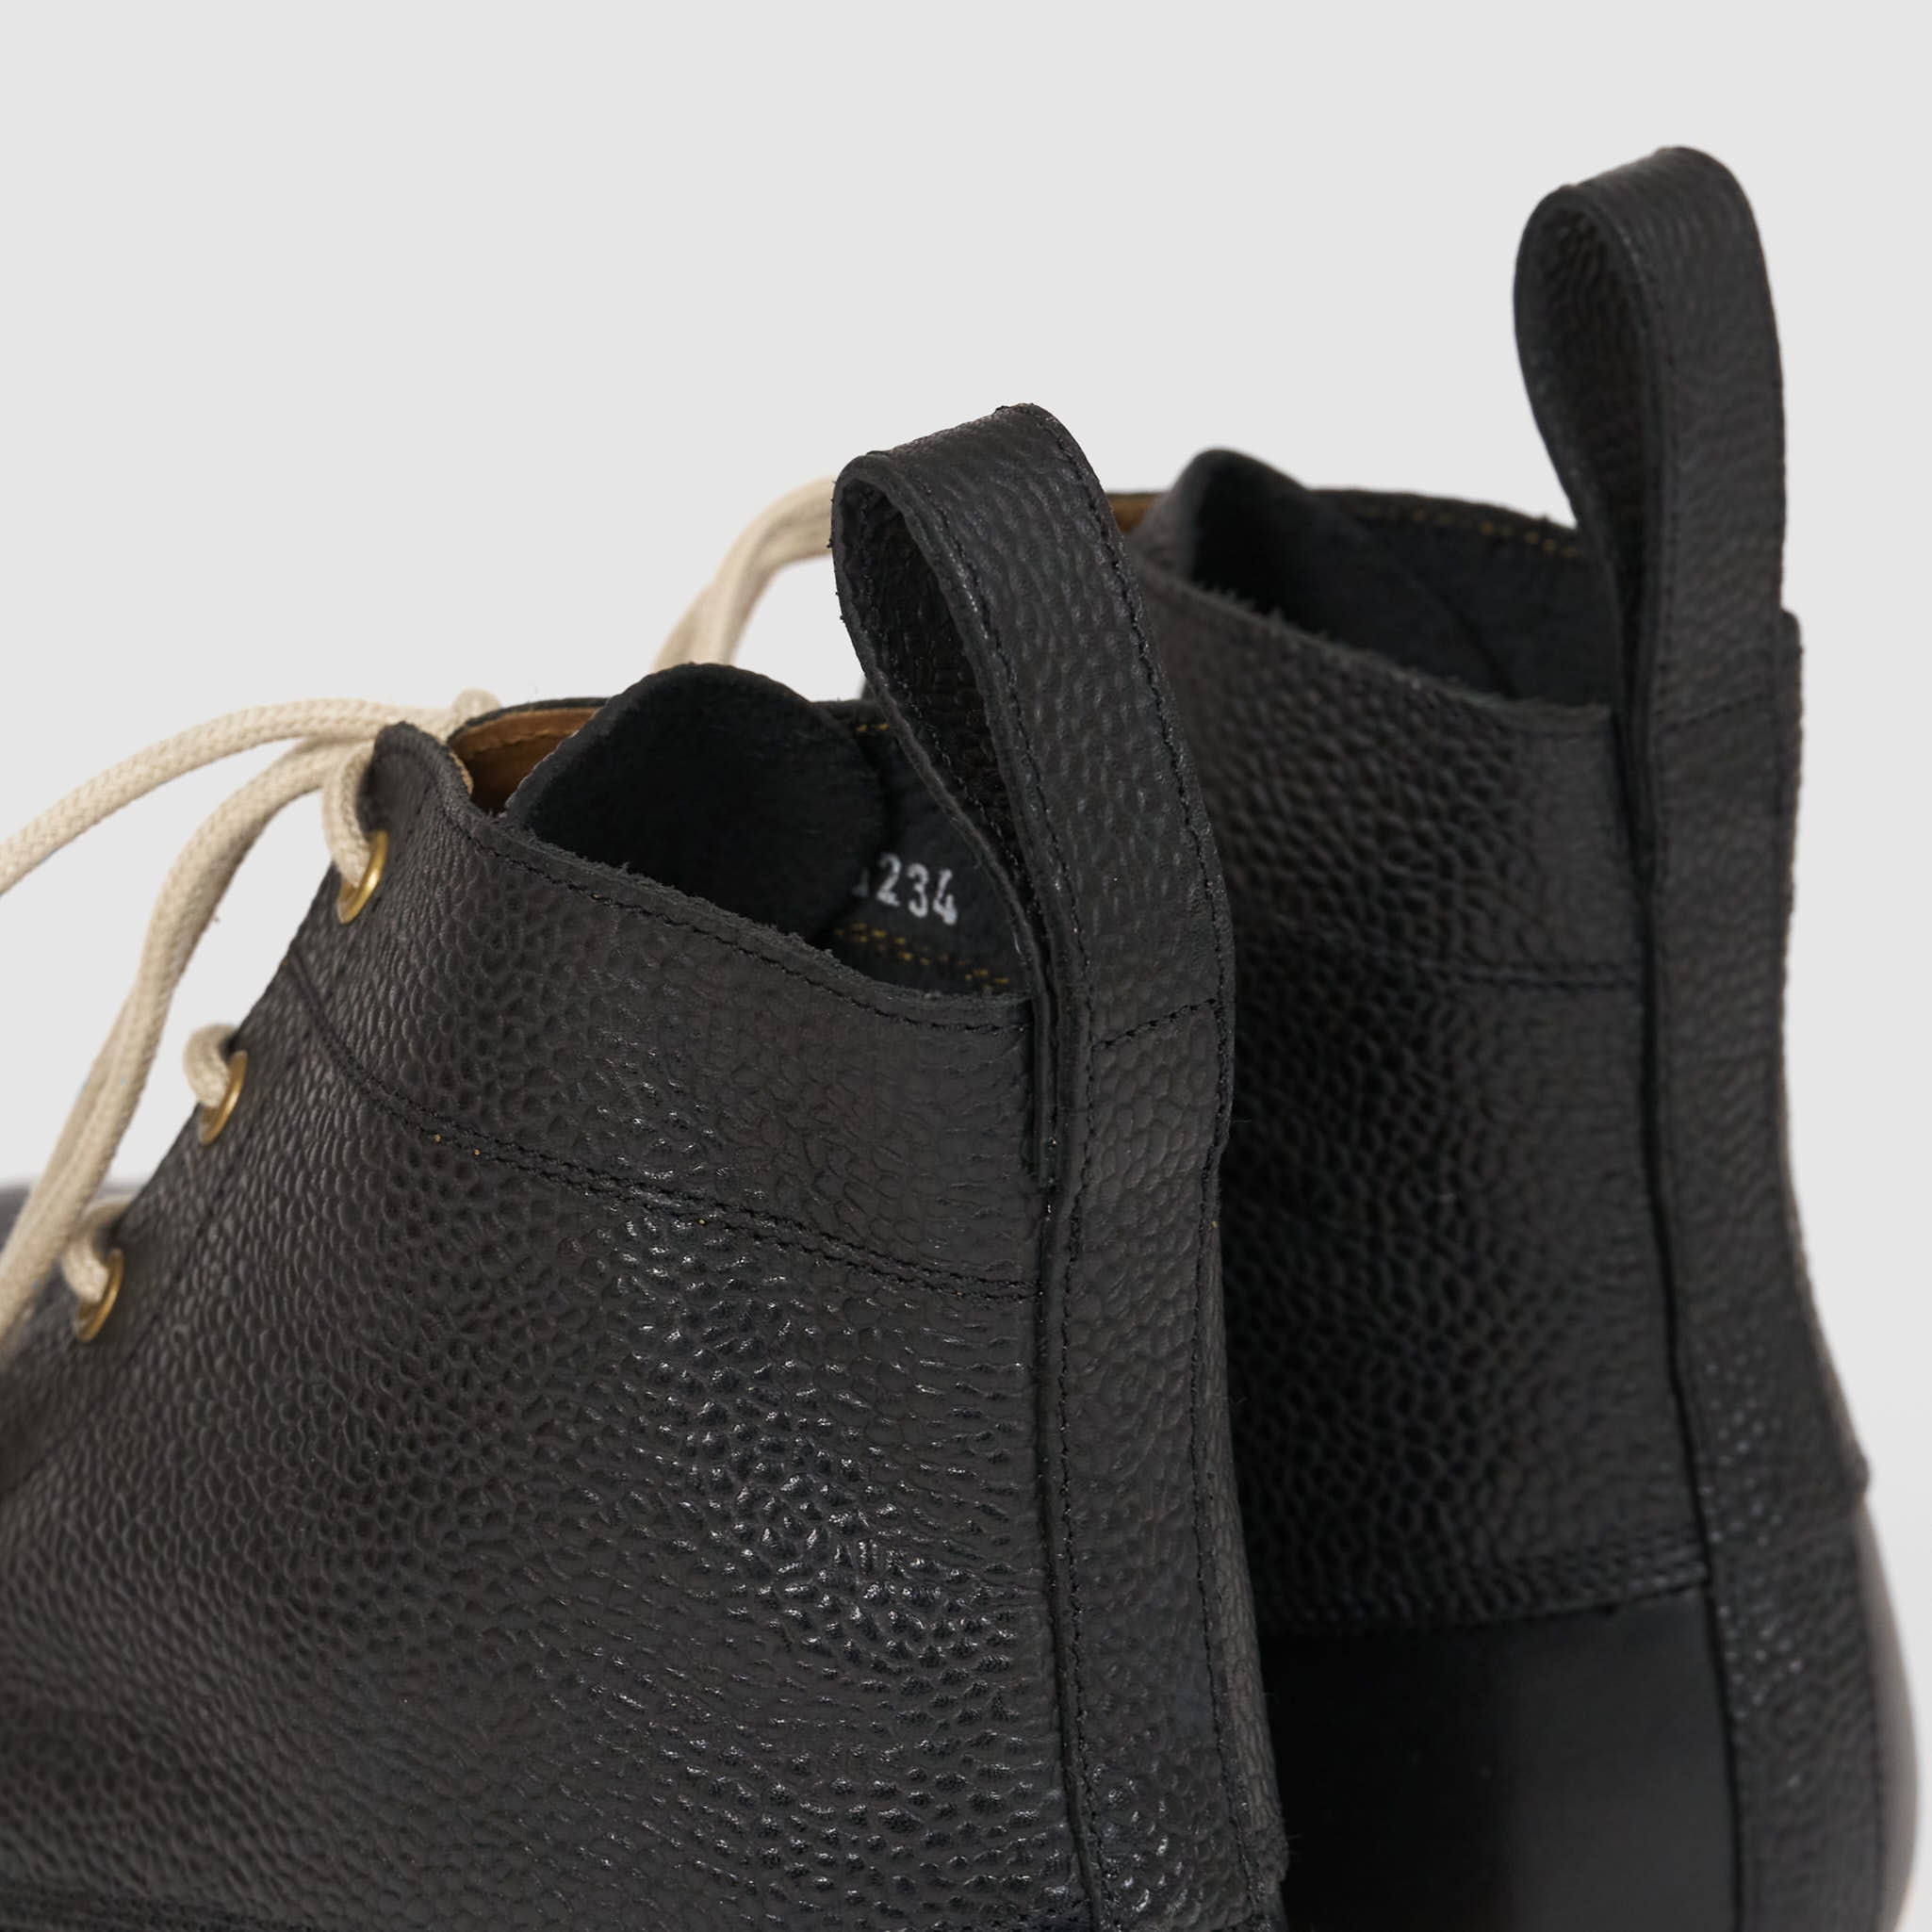 Miller | Mens Derby Shoes in Black Leather | Grenson